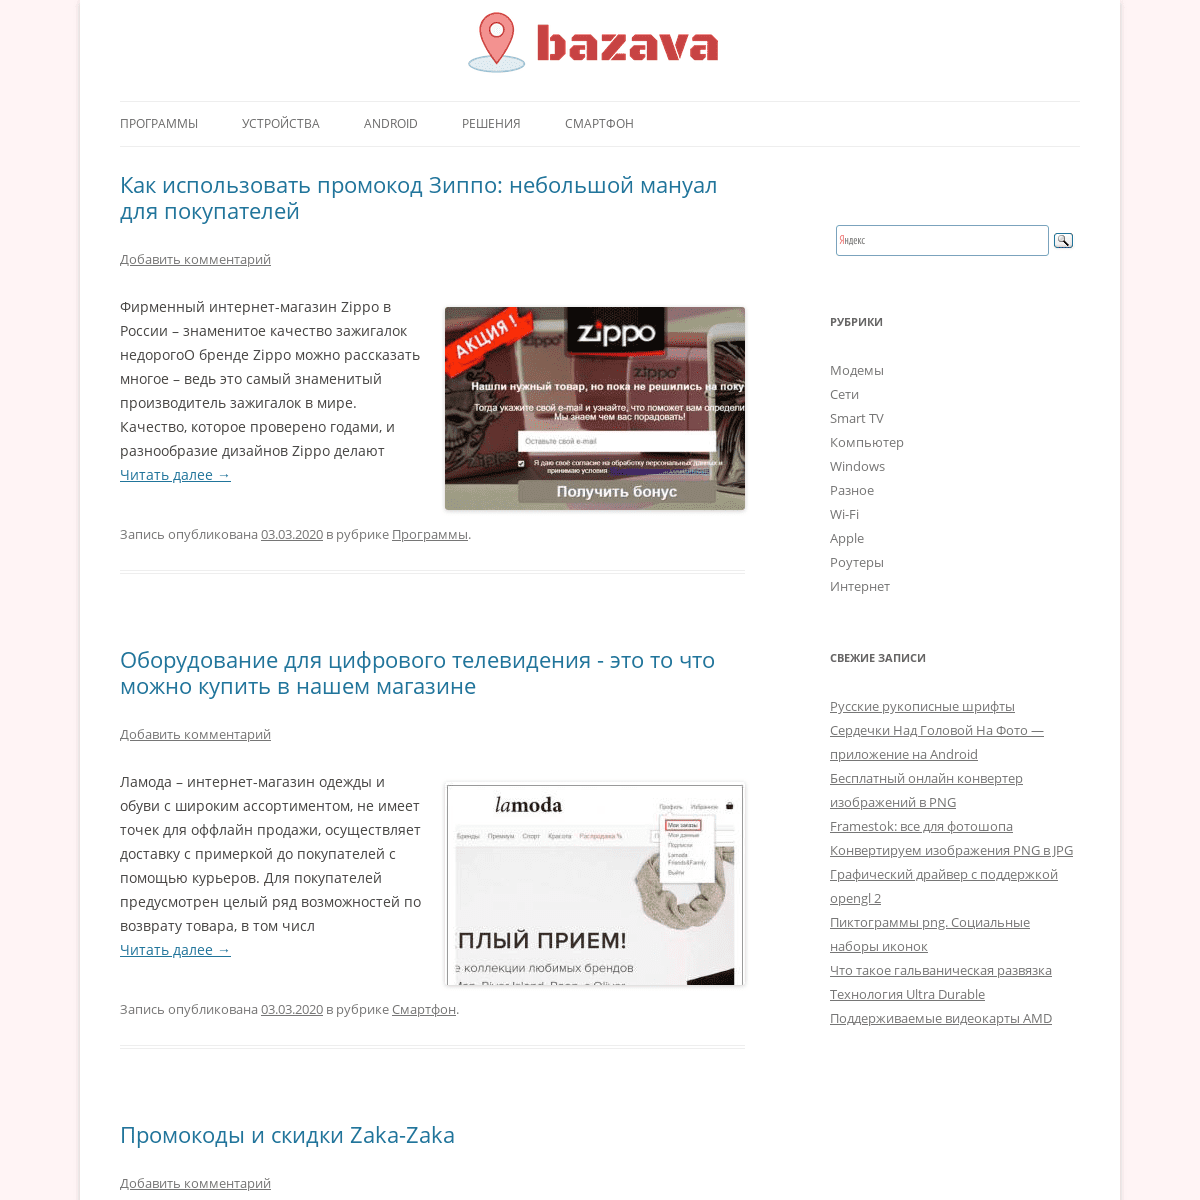 A complete backup of bazava.ru